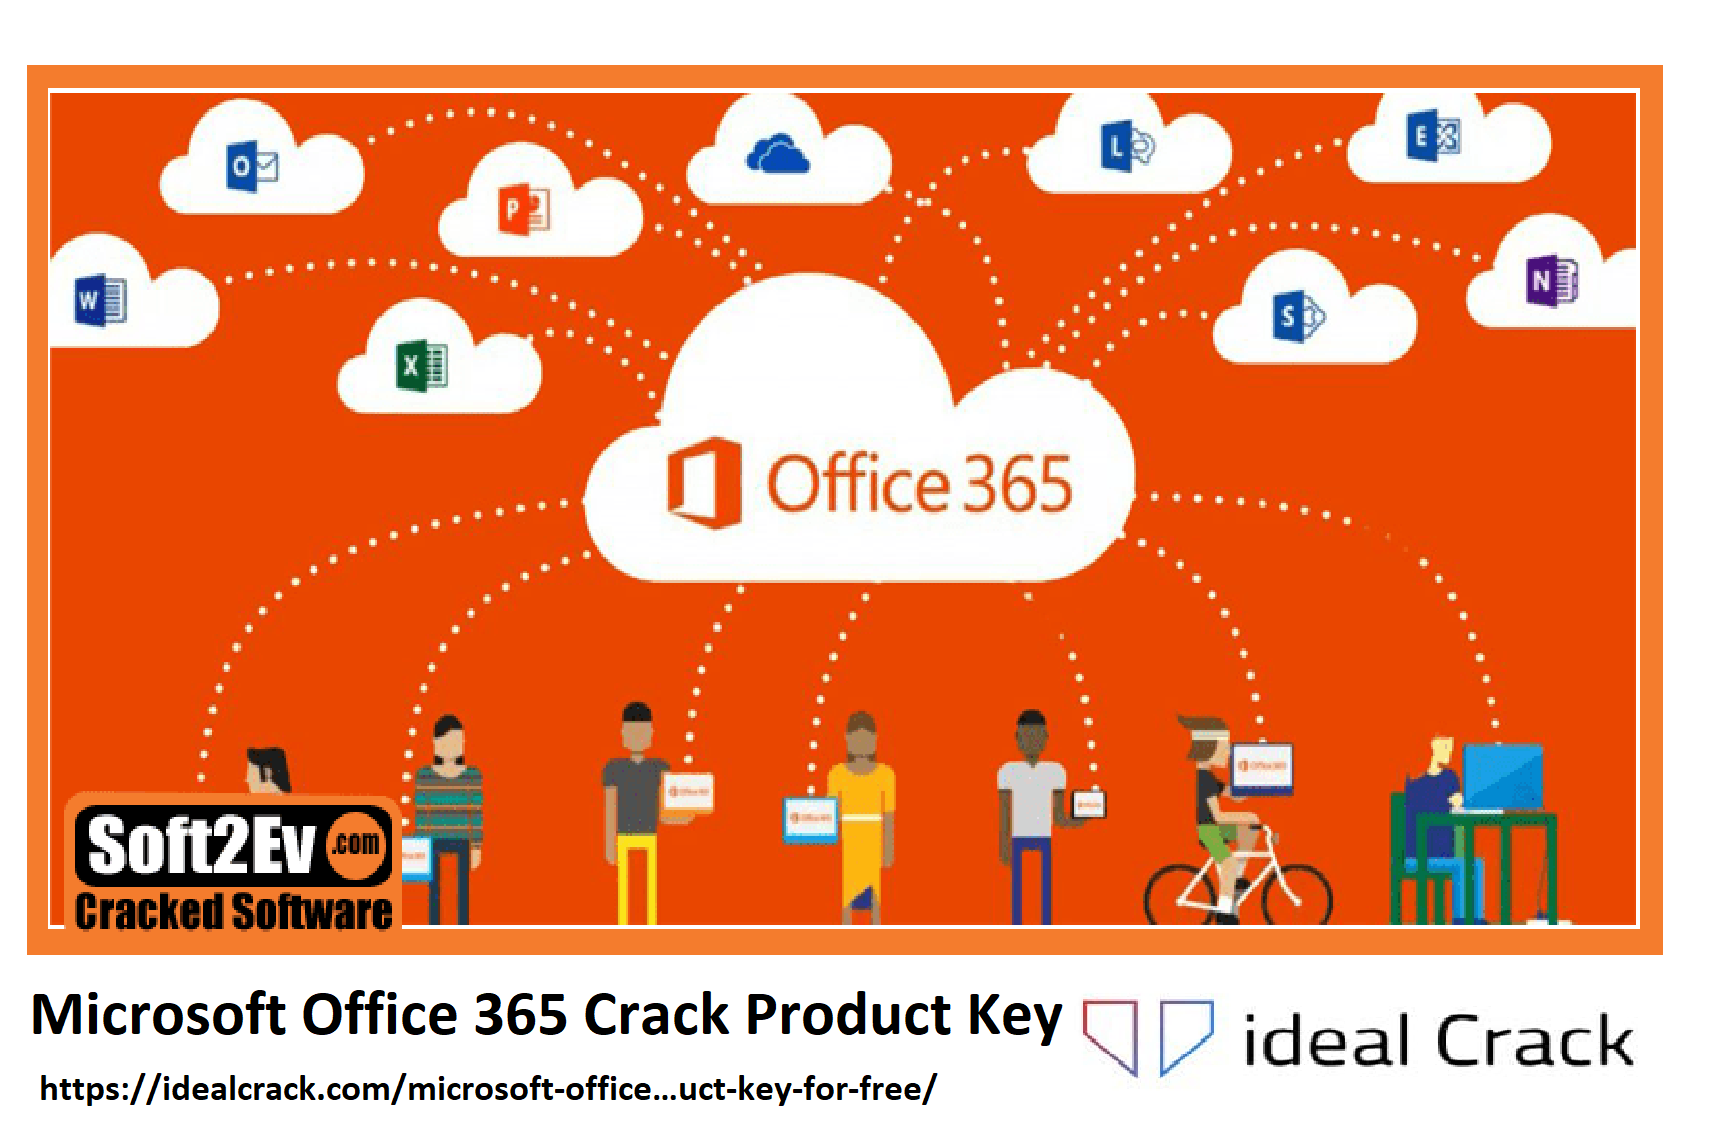 Microsoft Office 365 Crack Product Key